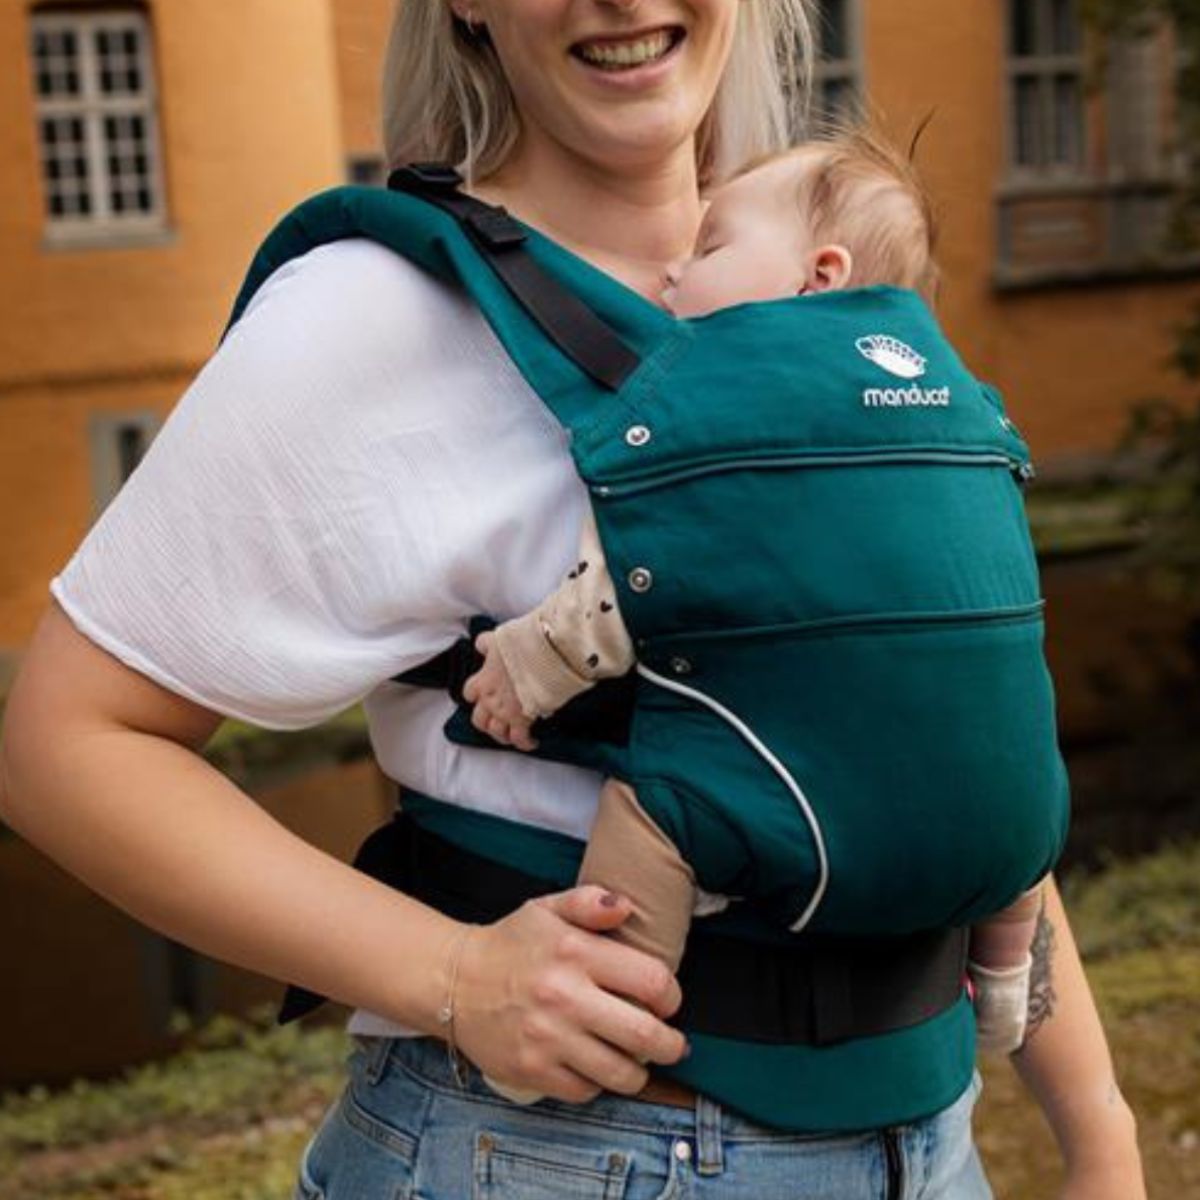 Echarpe porte bébé carry baby pétrol Selon stock